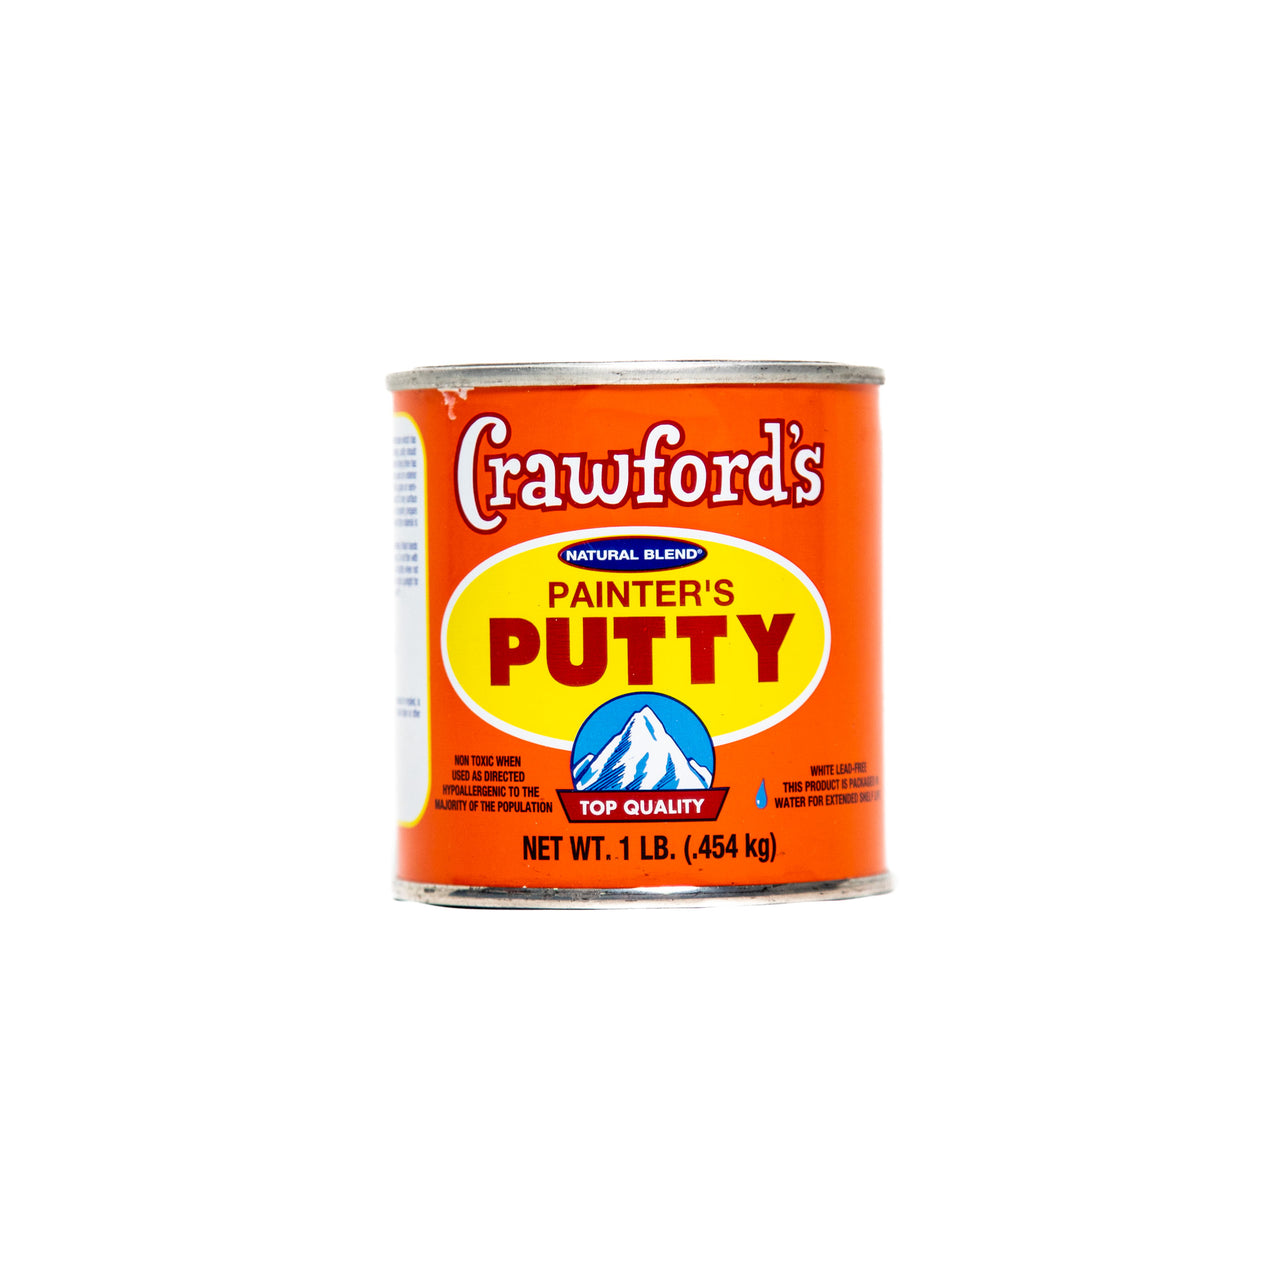 Crawford's Painter's Putty